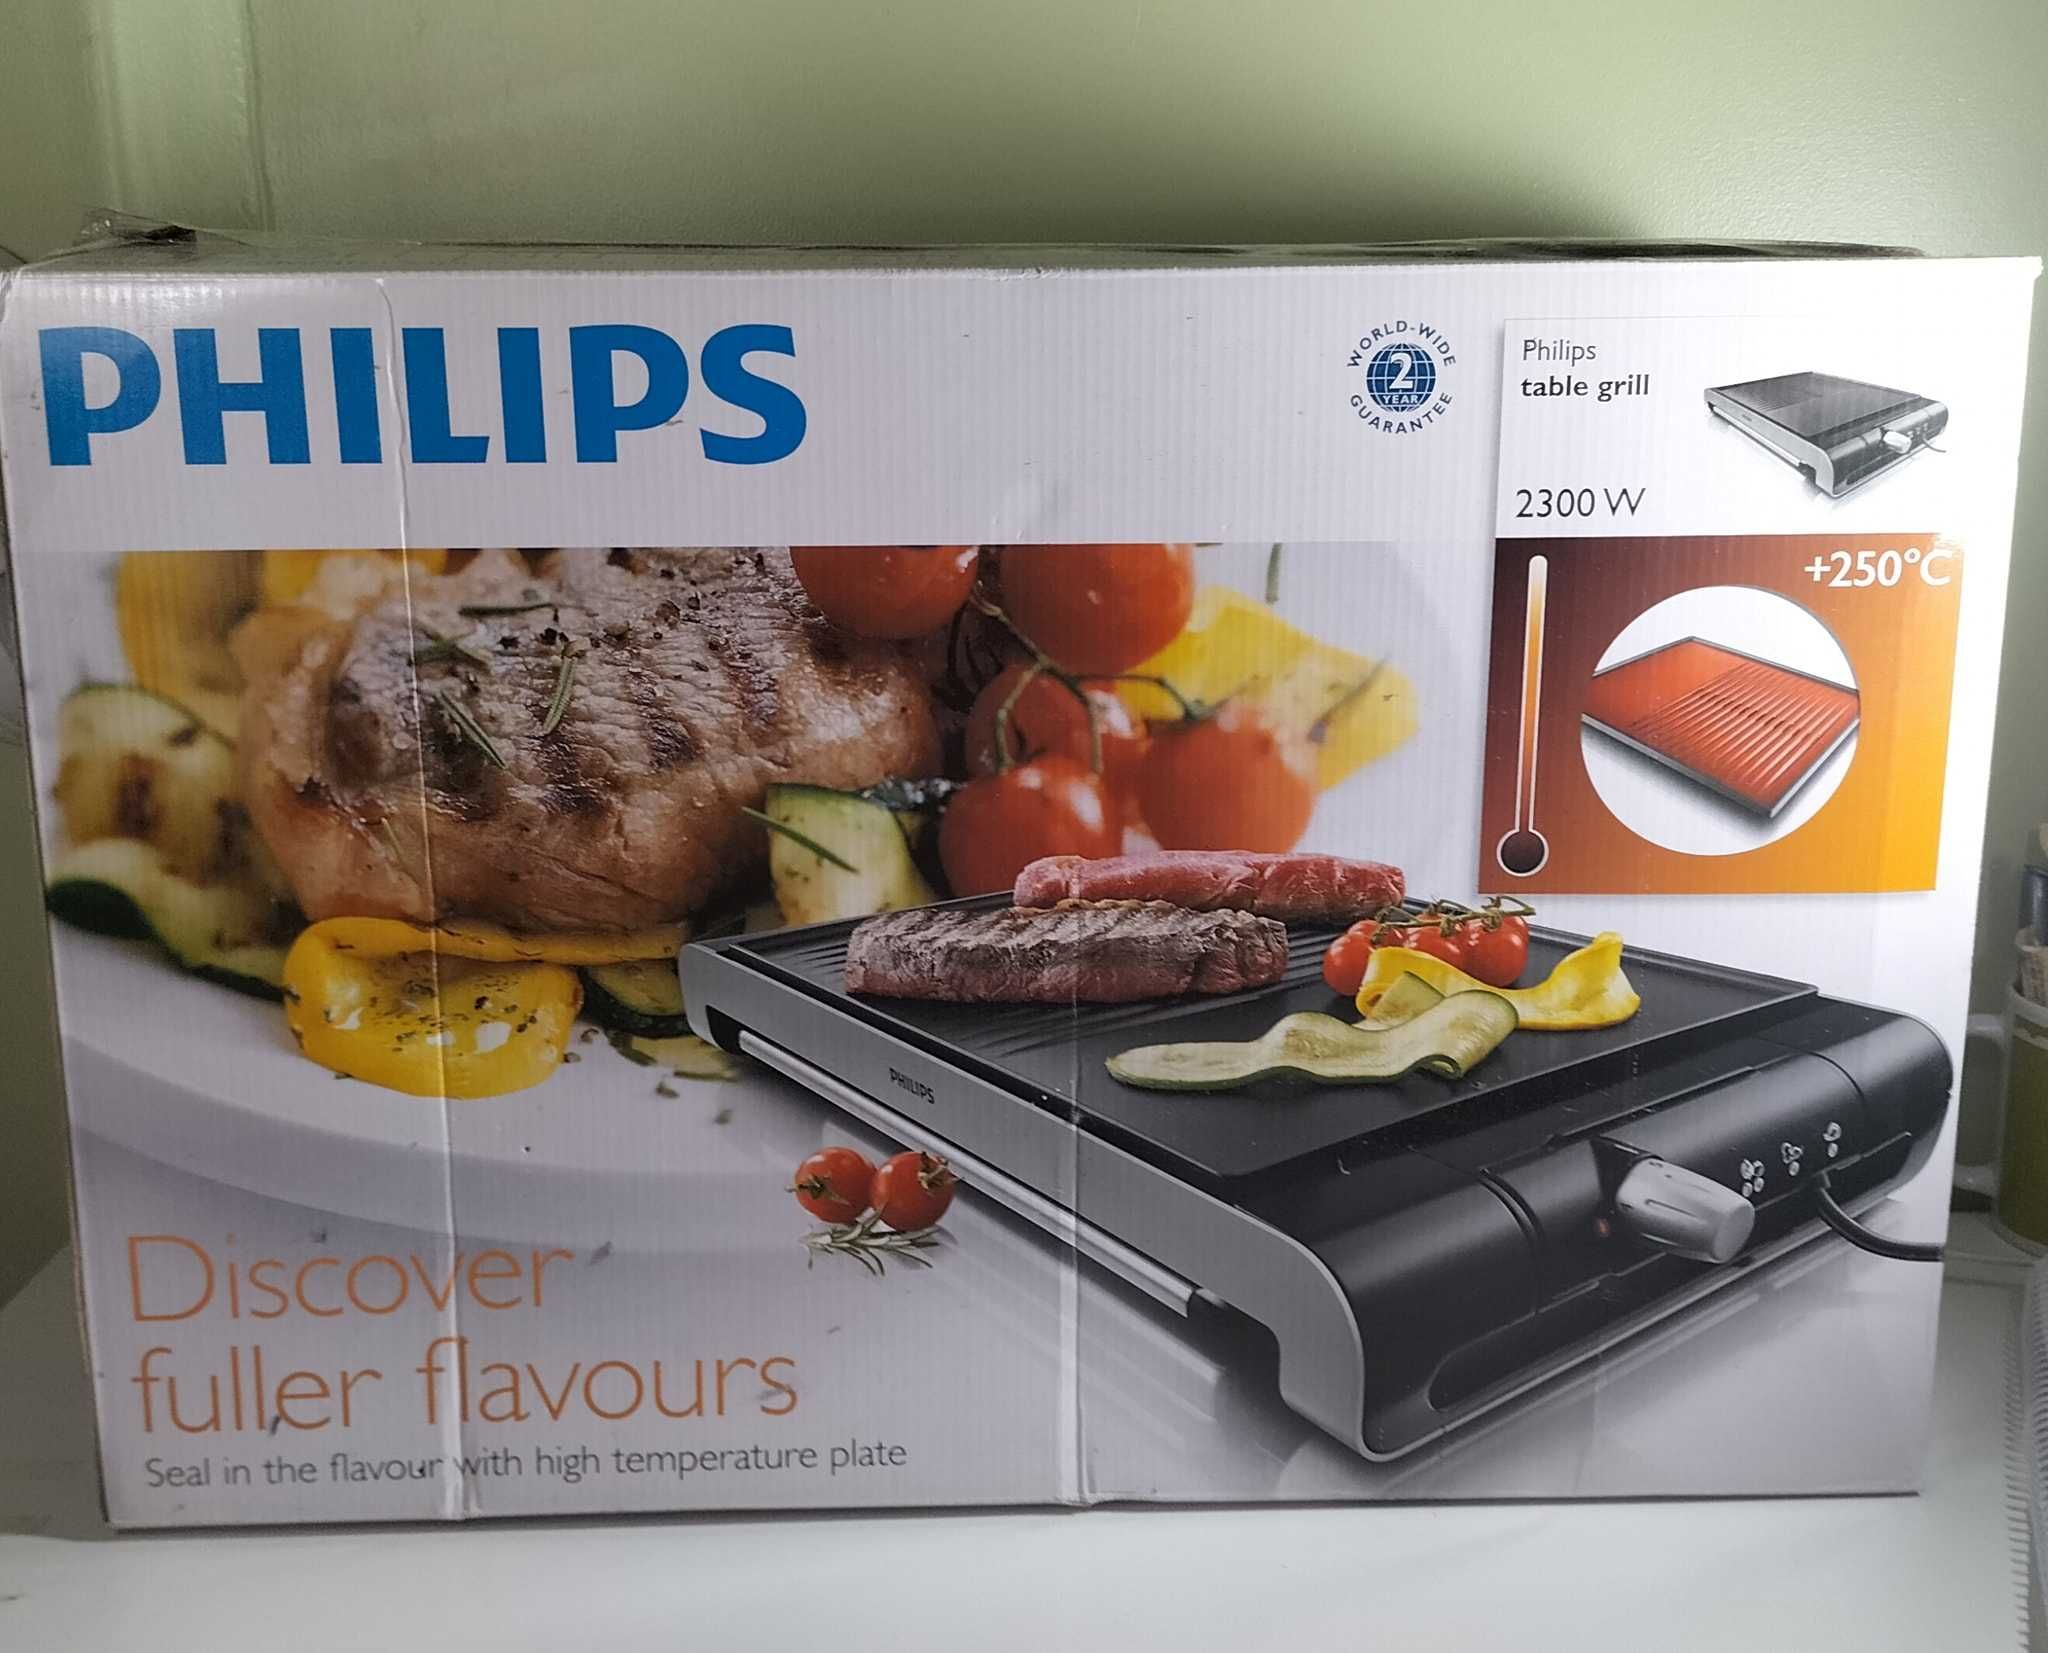 Grelha Philips 2300 W - Table grill